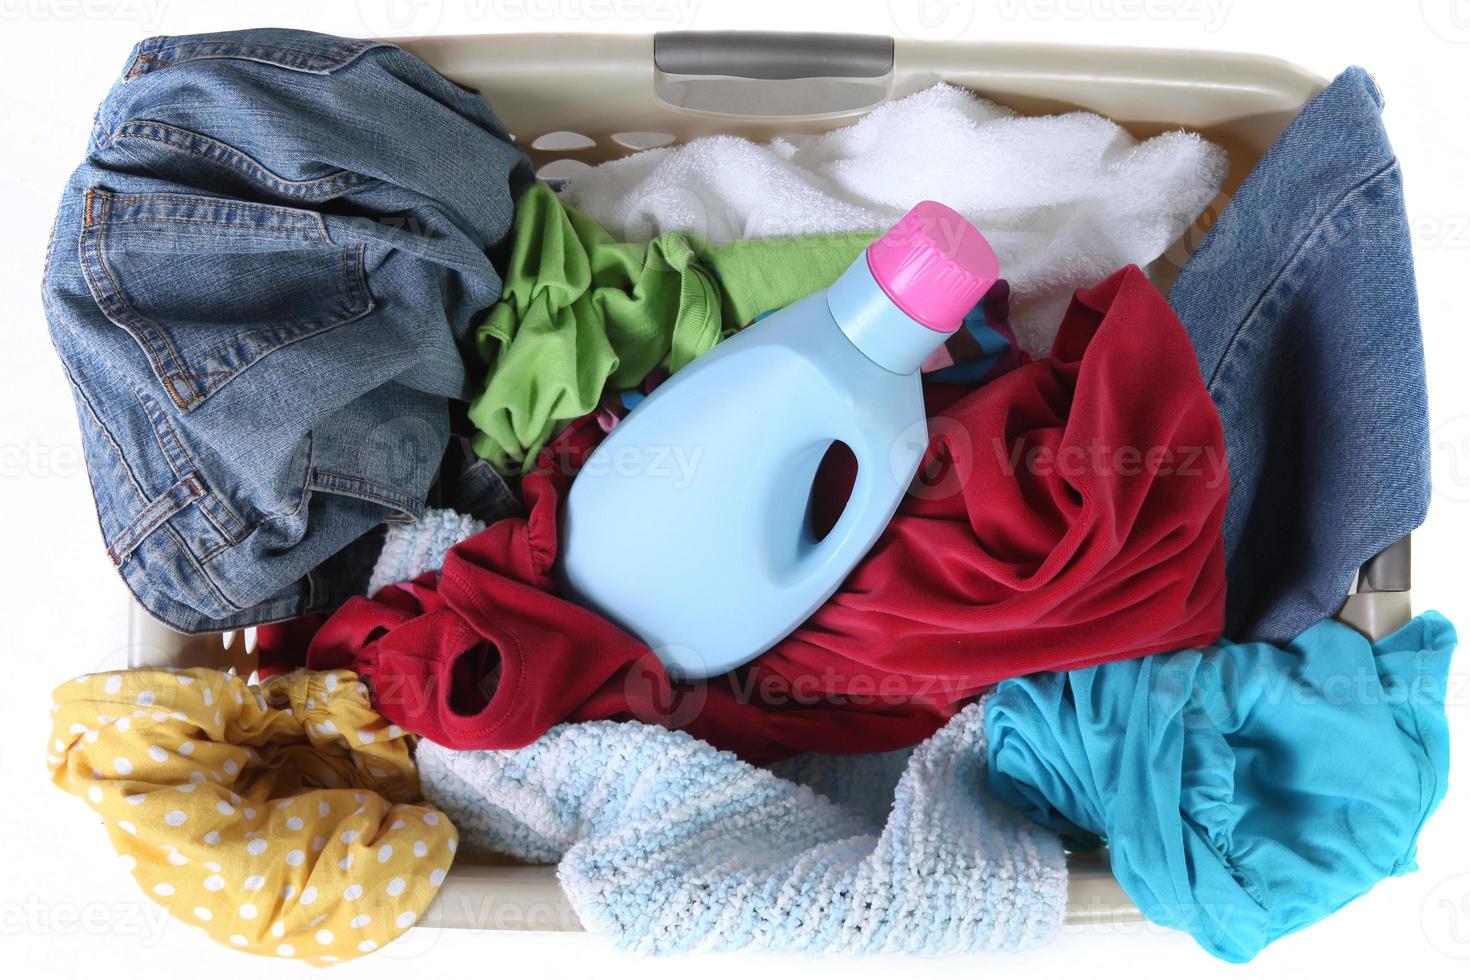 vista superior do cesto de roupa suja cheio de roupas sujas foto